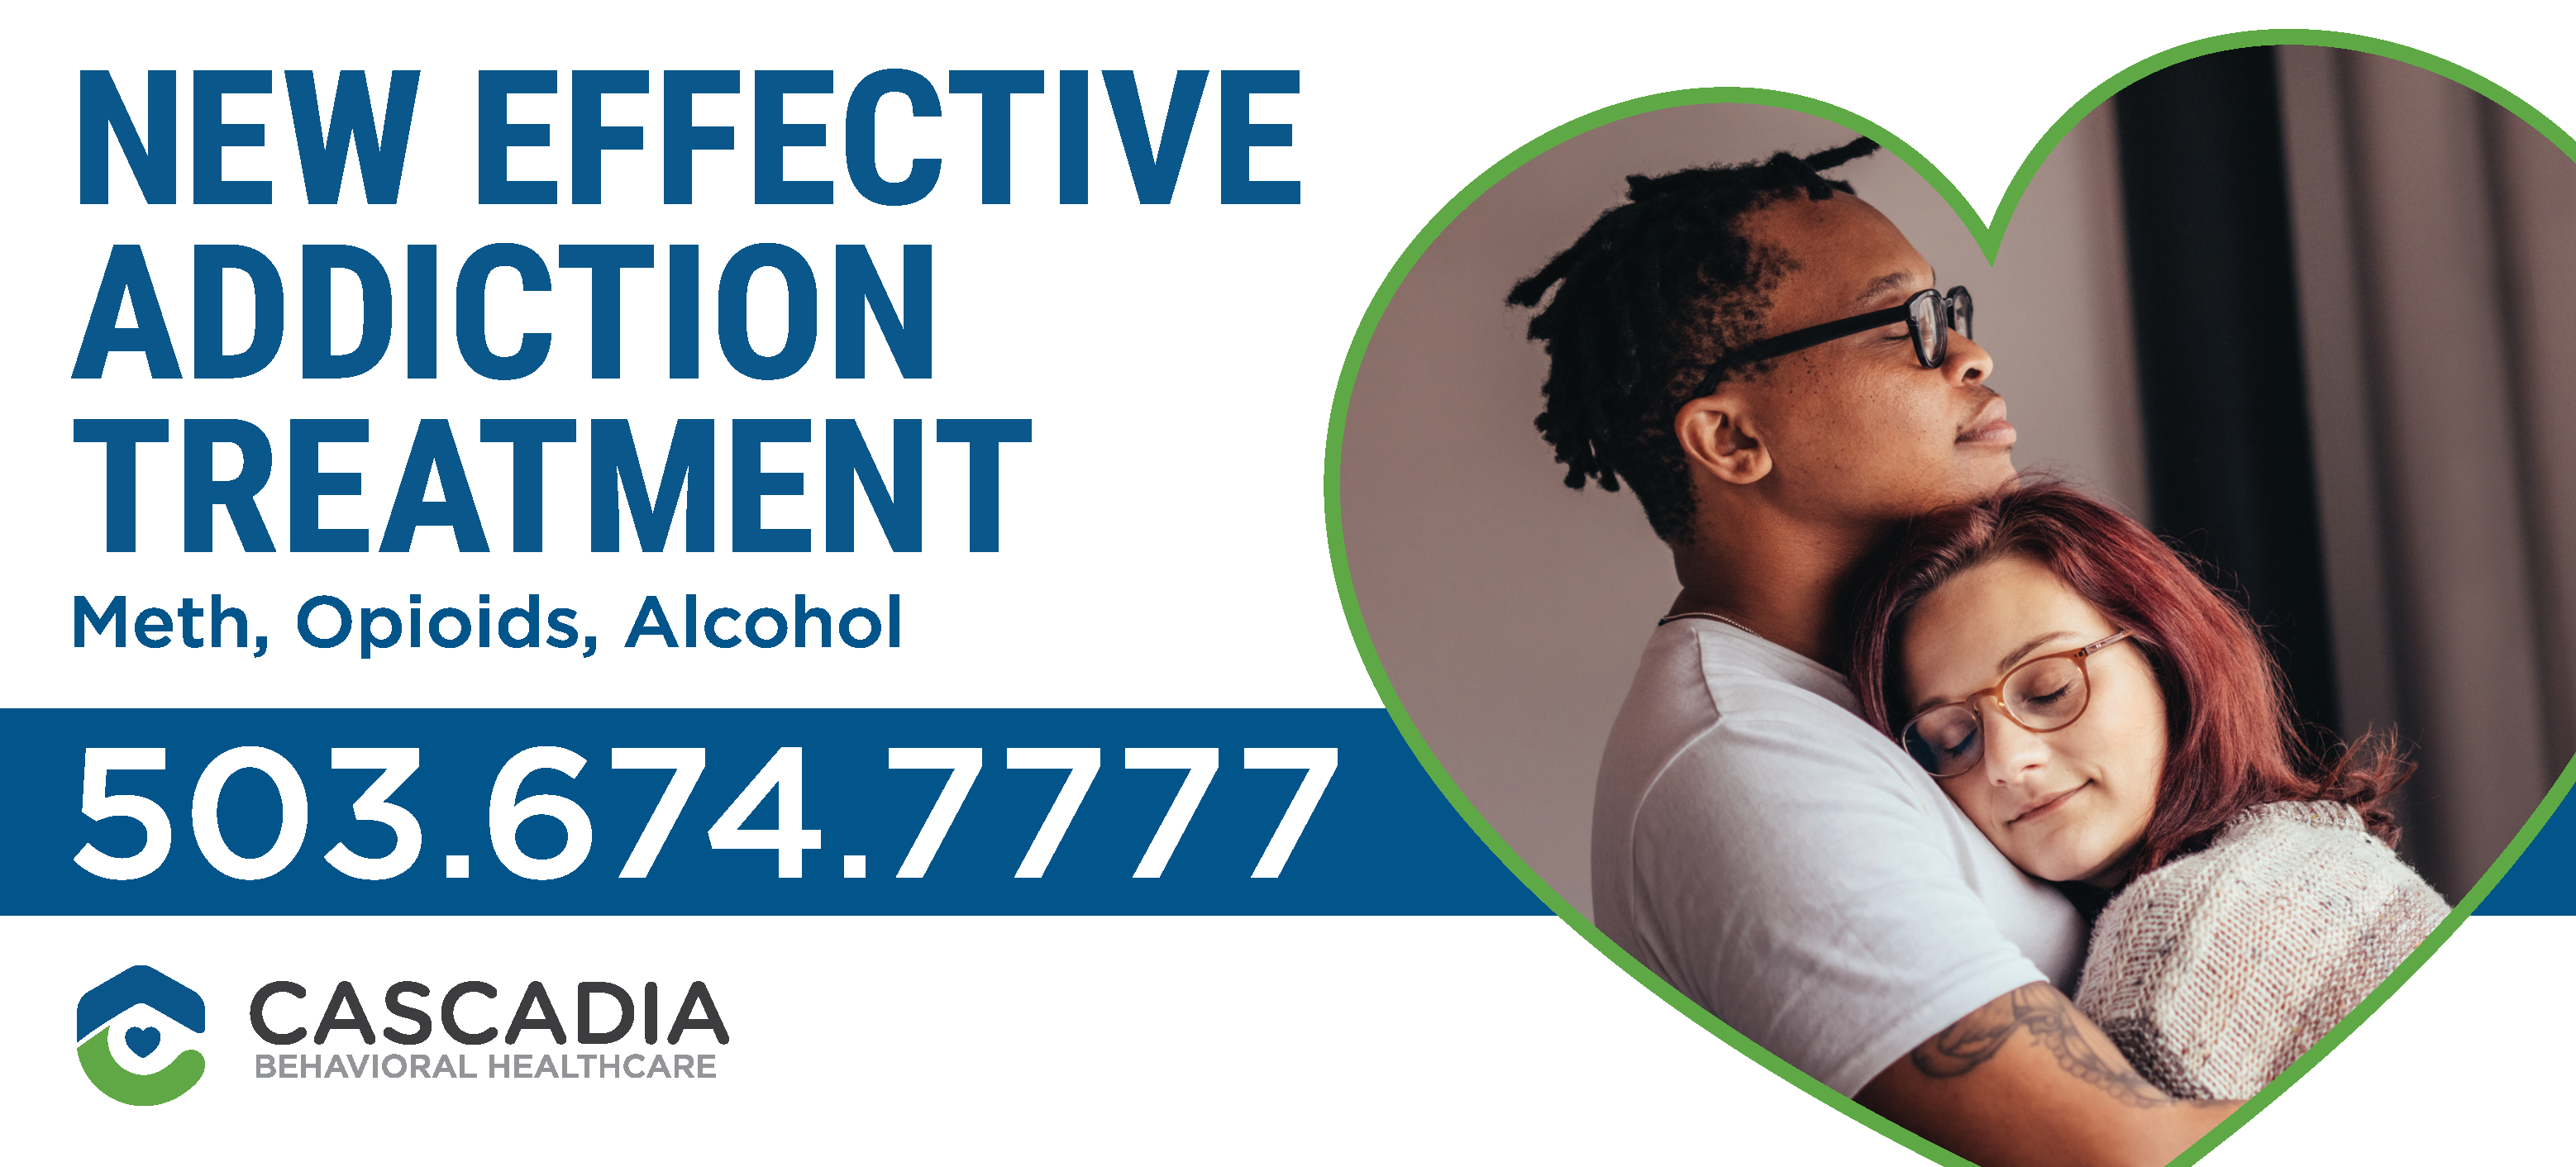 New effective addiction treatment. Meth, opioids, alcohol. 503-674-7777. Cascadia Behavioral Healthcare.